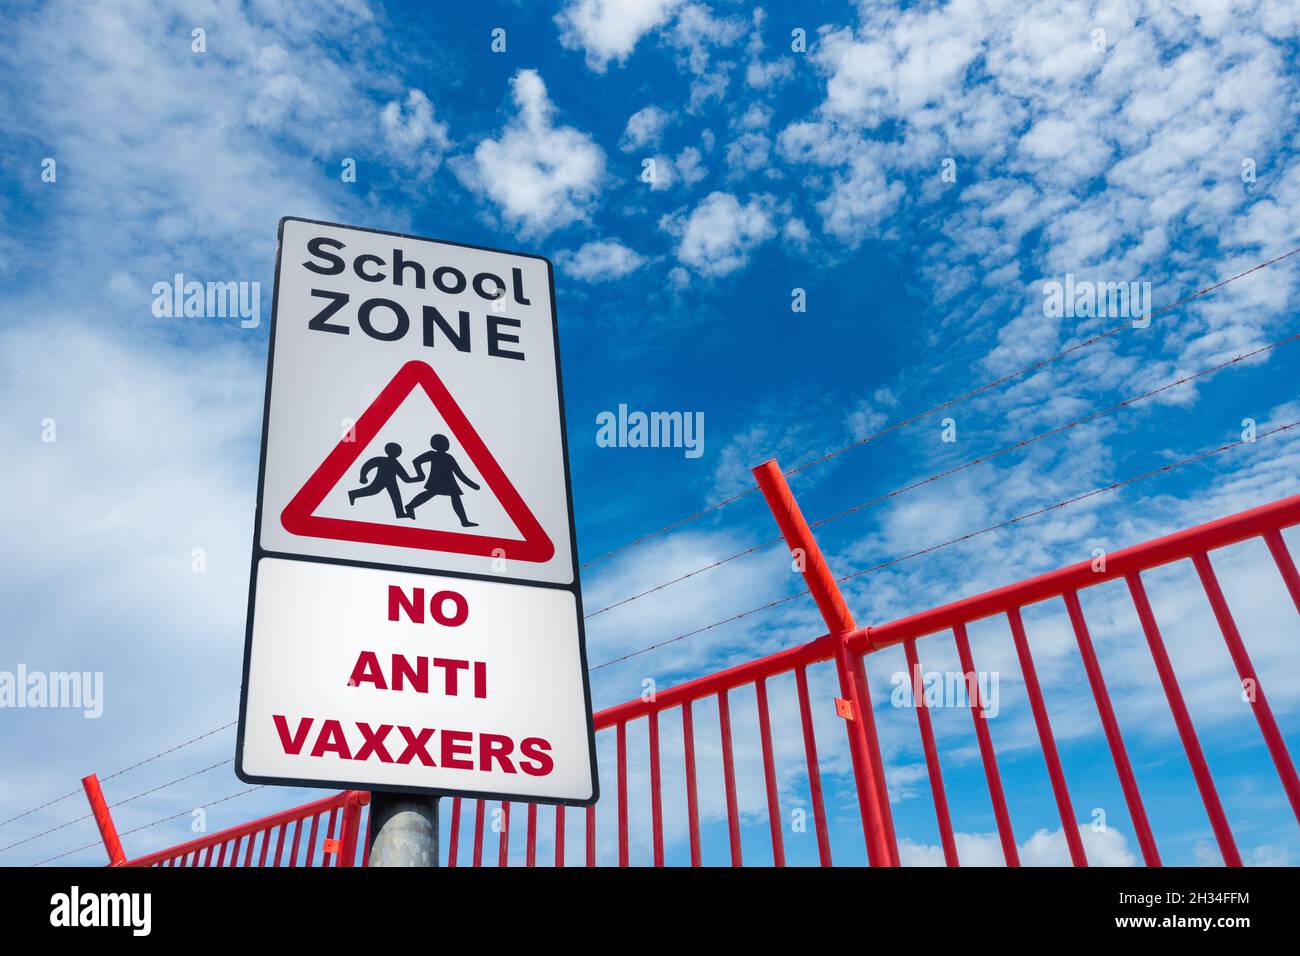 No anti vaxxers on school zone sign. Anti Covid, coronavirus vaccine, vaccination concept image Stock Photo